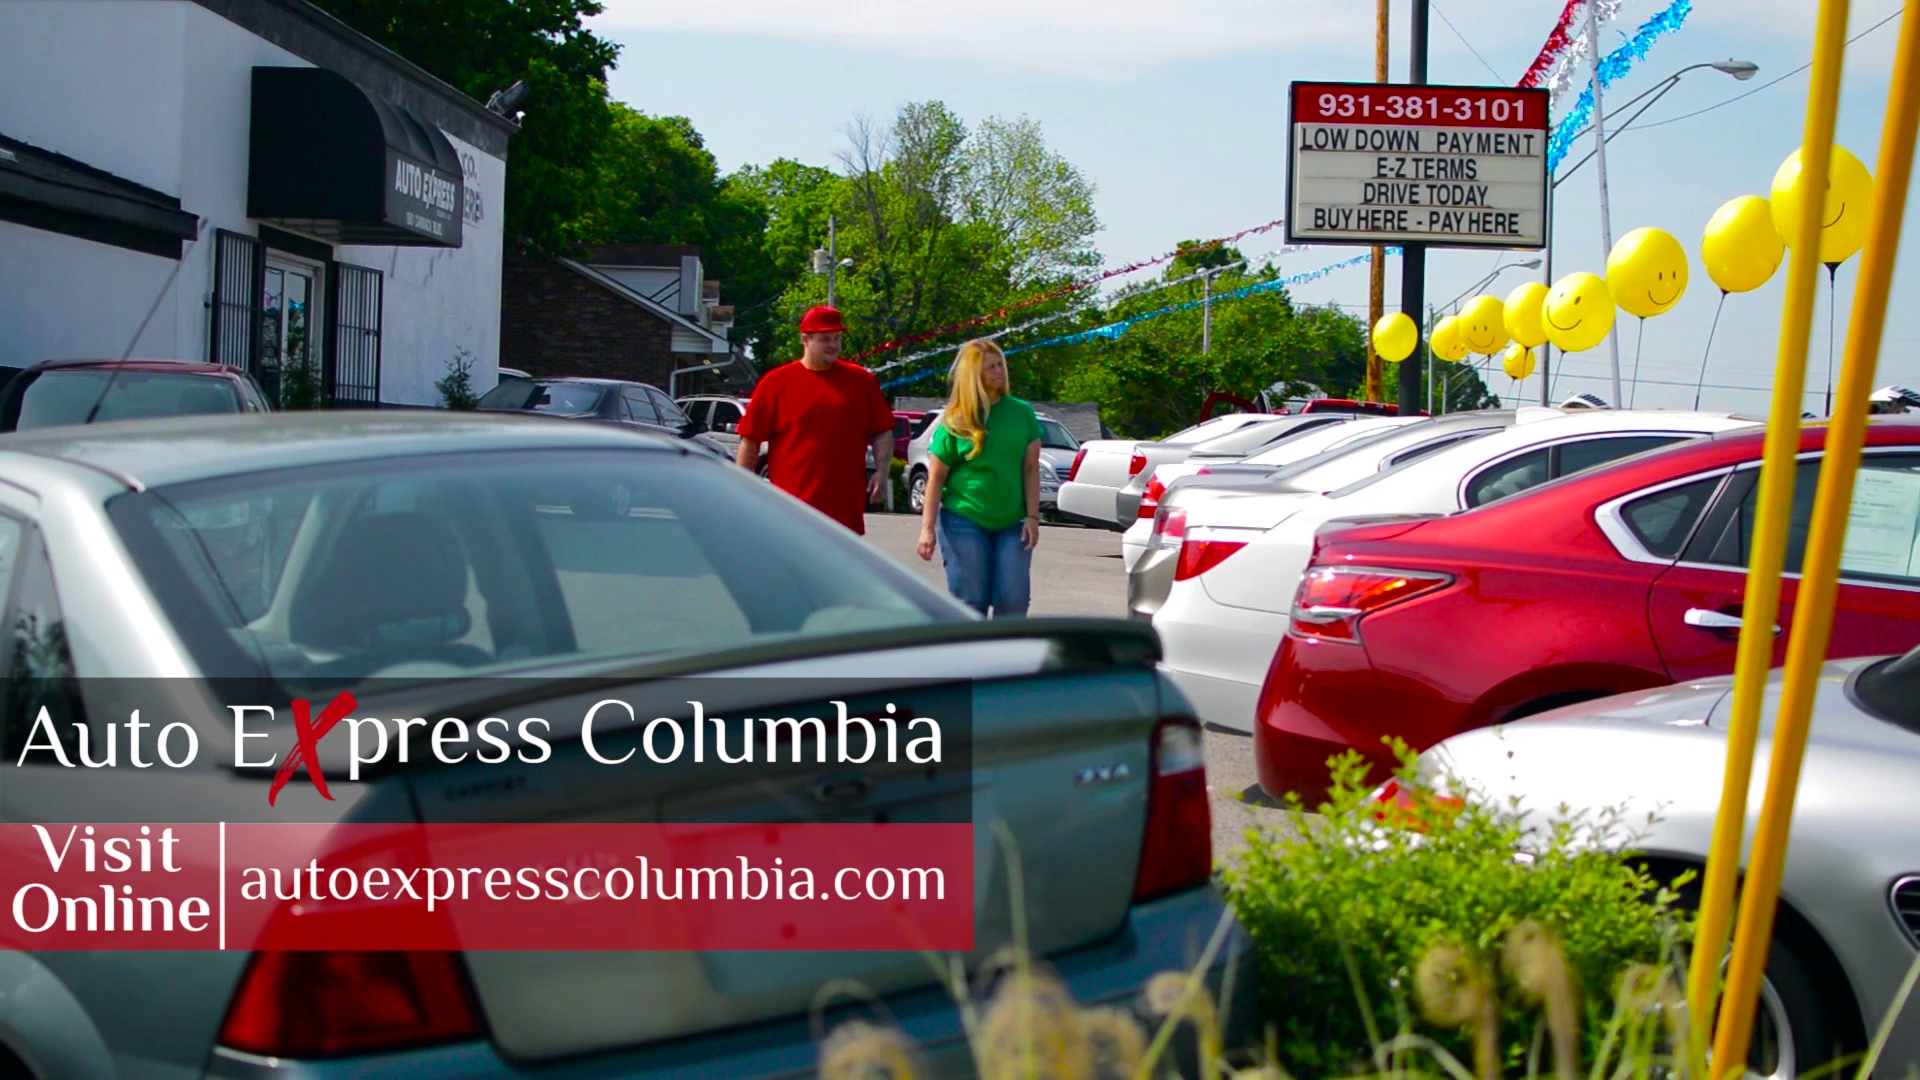 Auto Express Columbia